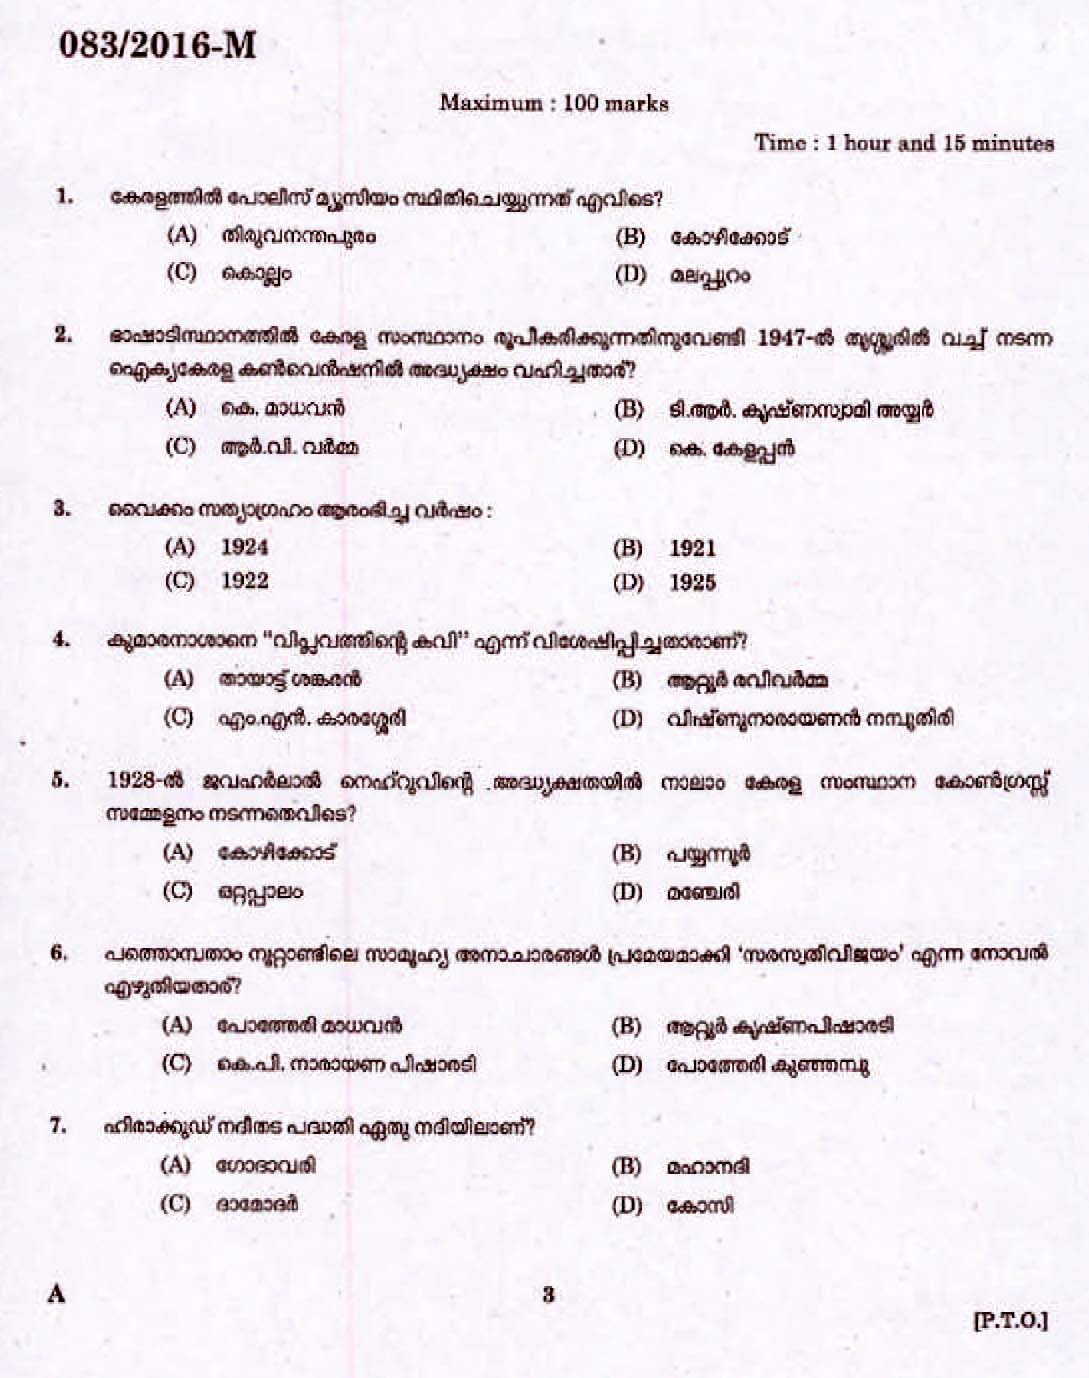 Kerala PSC Statistical Assistant Grade II OMR Exam 2016 Question Paper Code 0832016 M 1